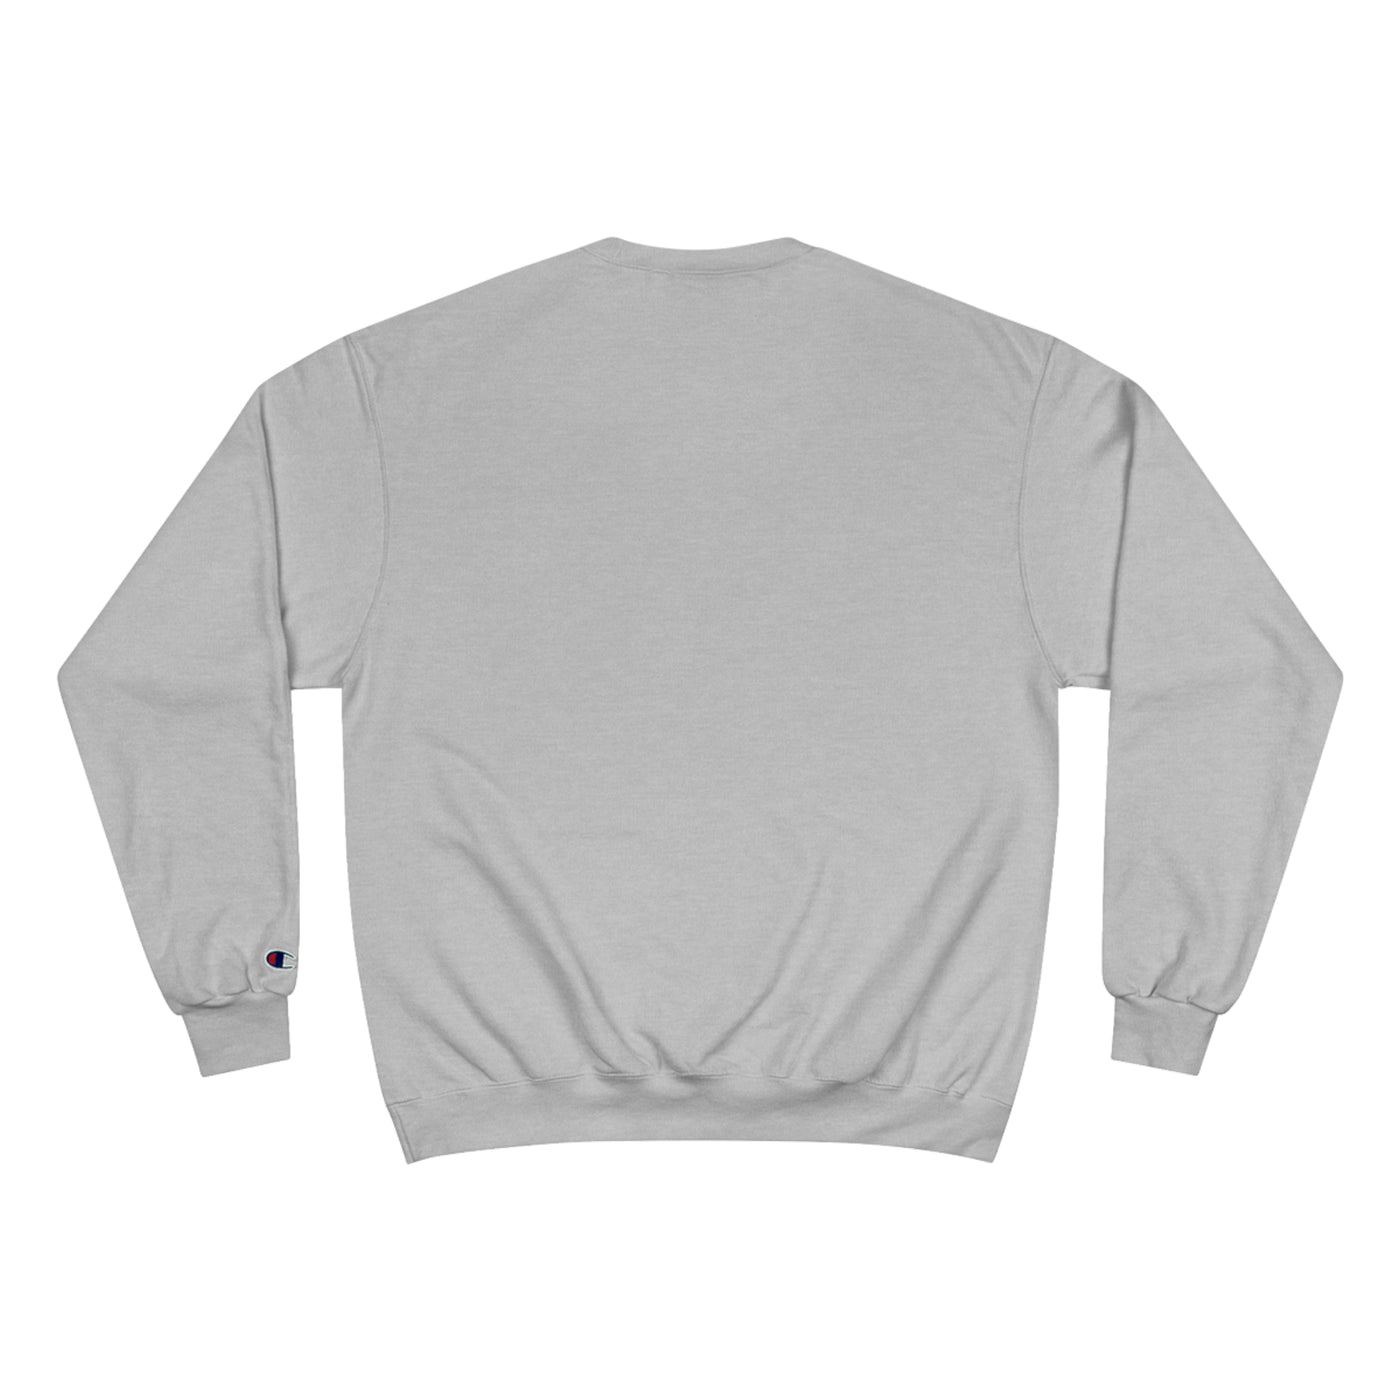 Men’s “Burly Earl” Champion Sweatshirt